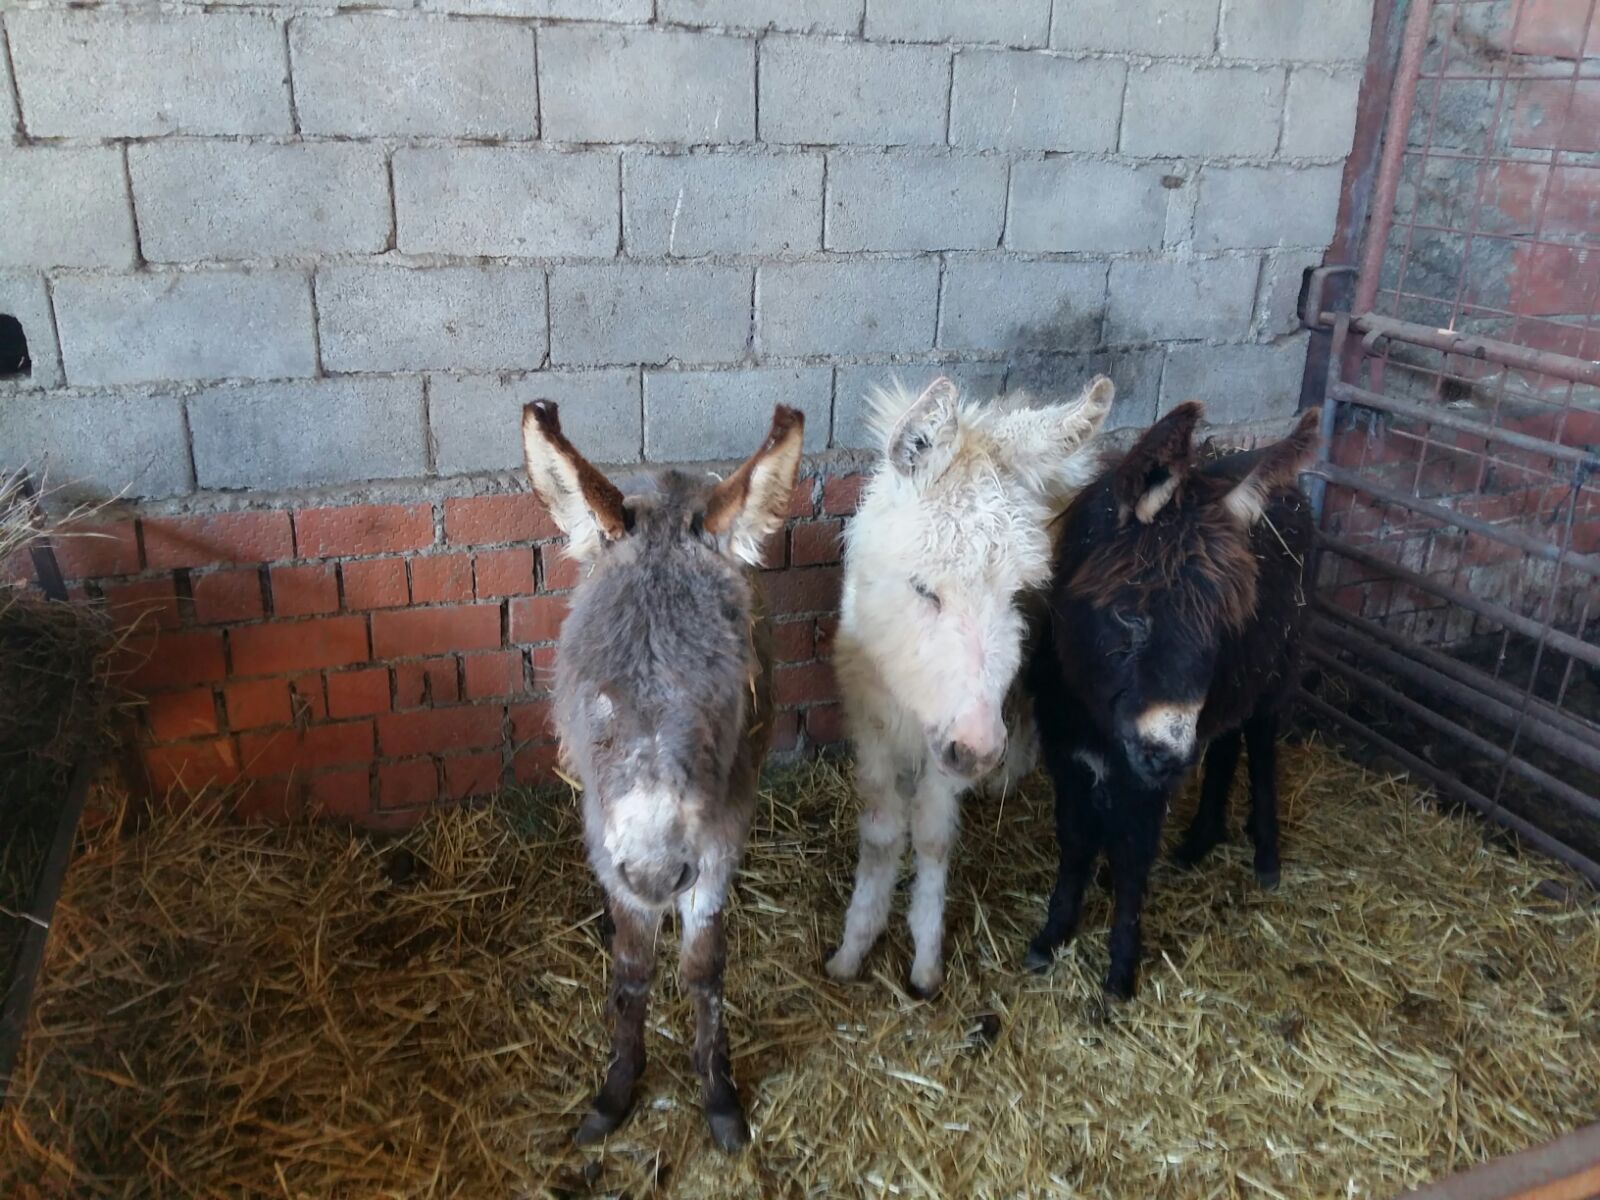 Some of the donkeys rescued from Guijo de Granadilla, Cáceres